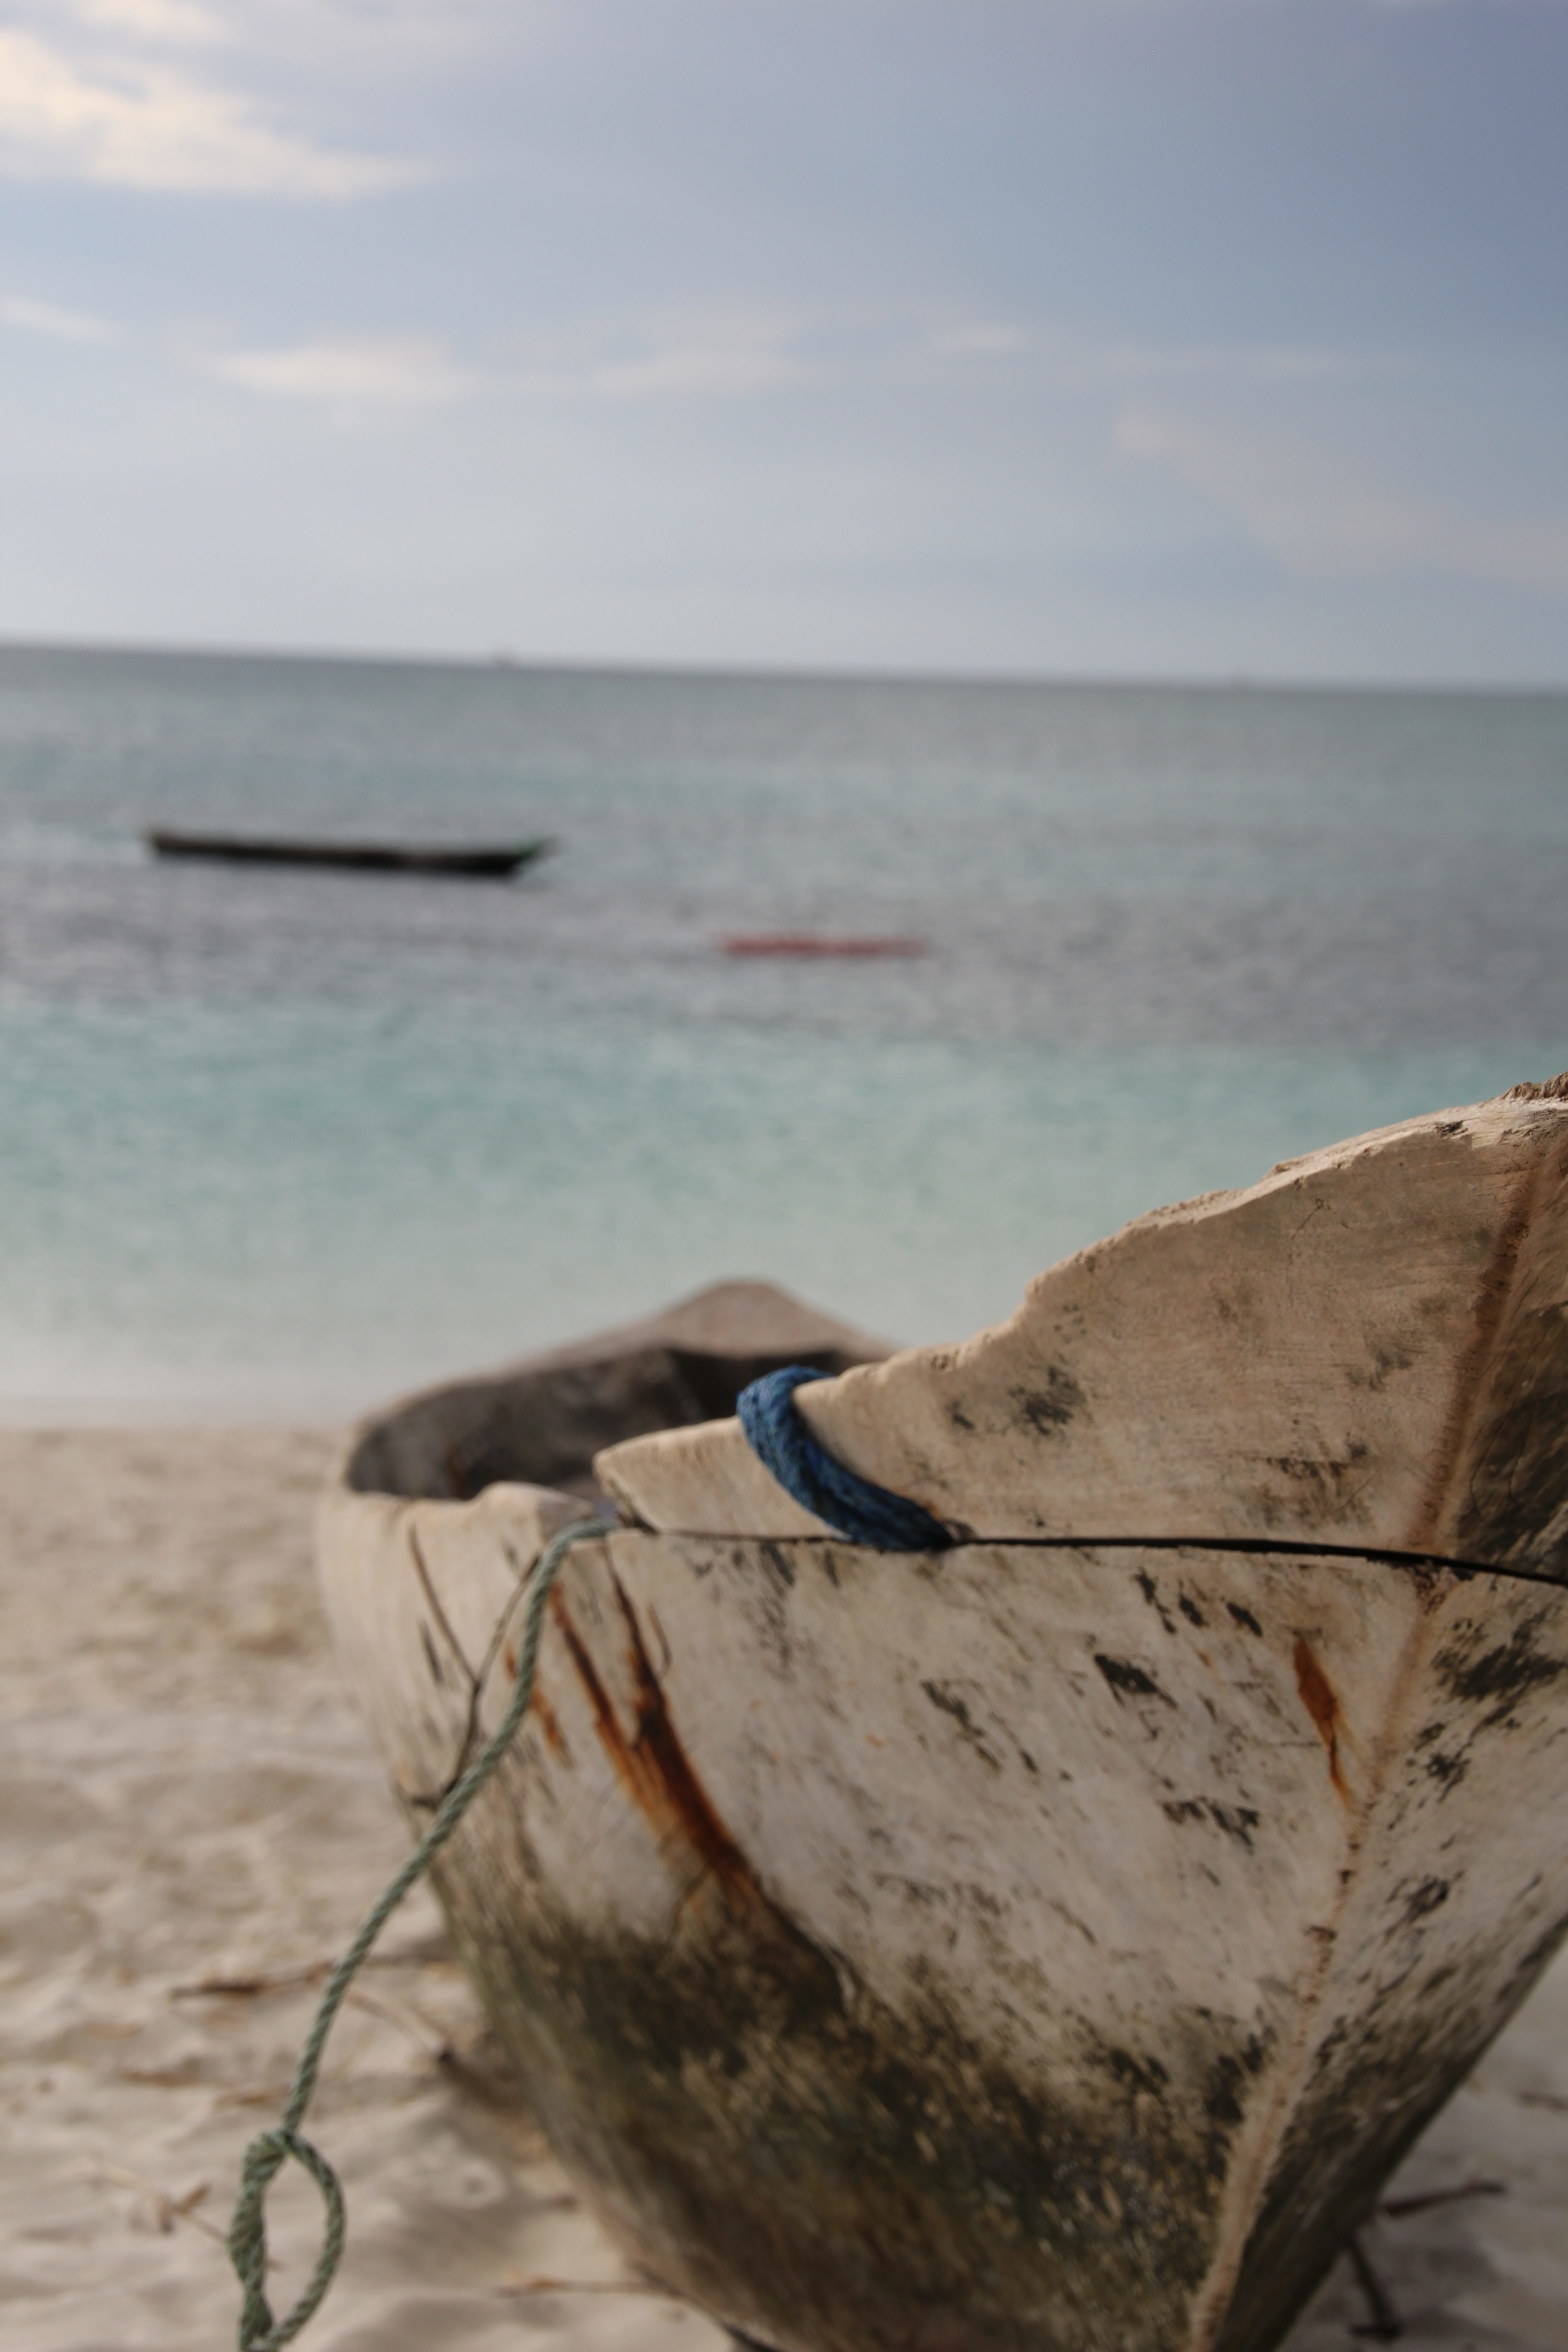 Traditional wodden boat on the beach in Zanzibar